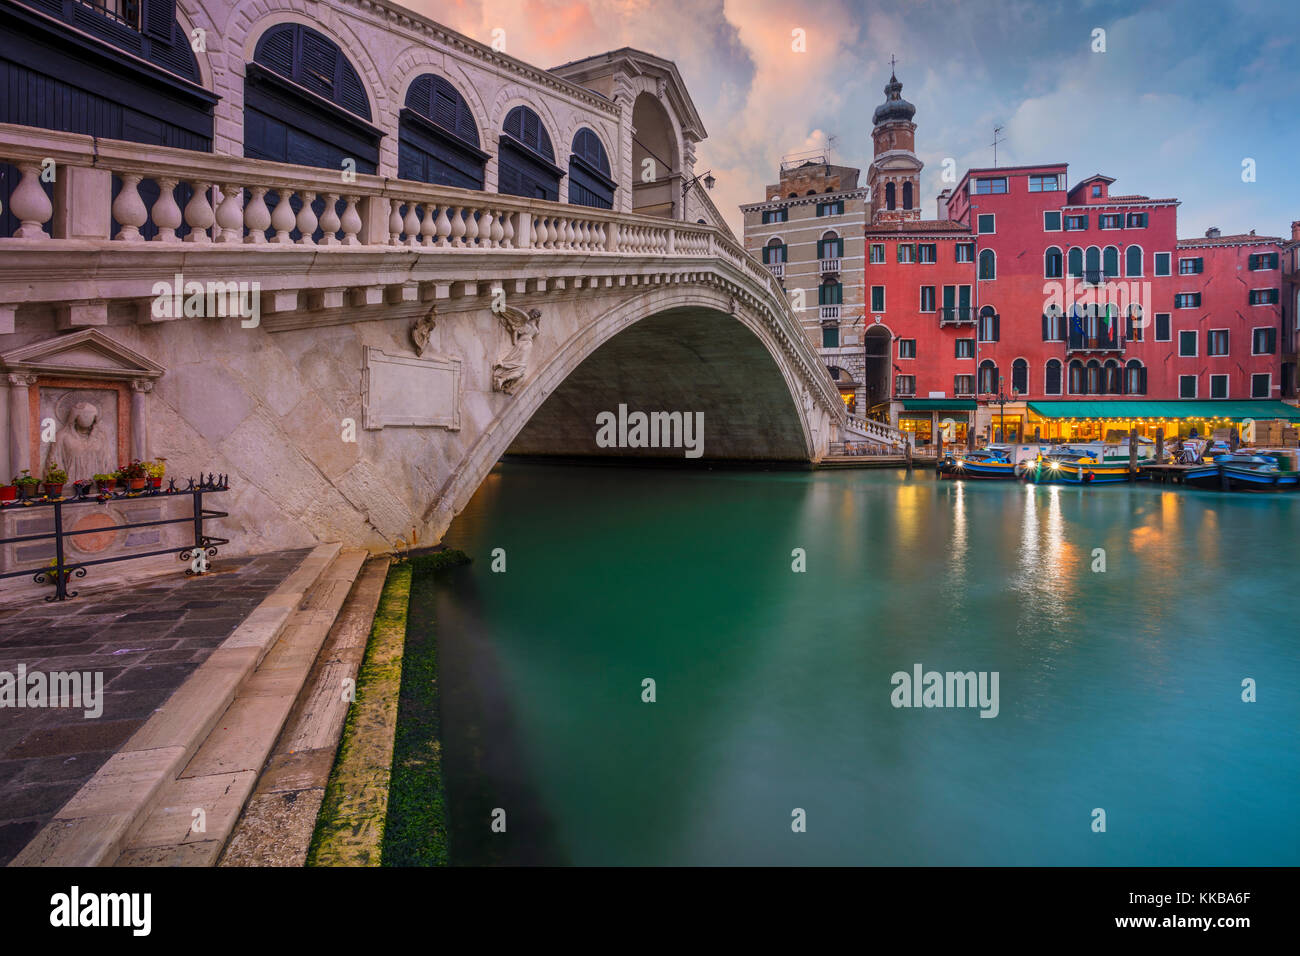 Venice. Cityscape image of Venice with famous Rialto Bridge and Grand Canal. Stock Photo